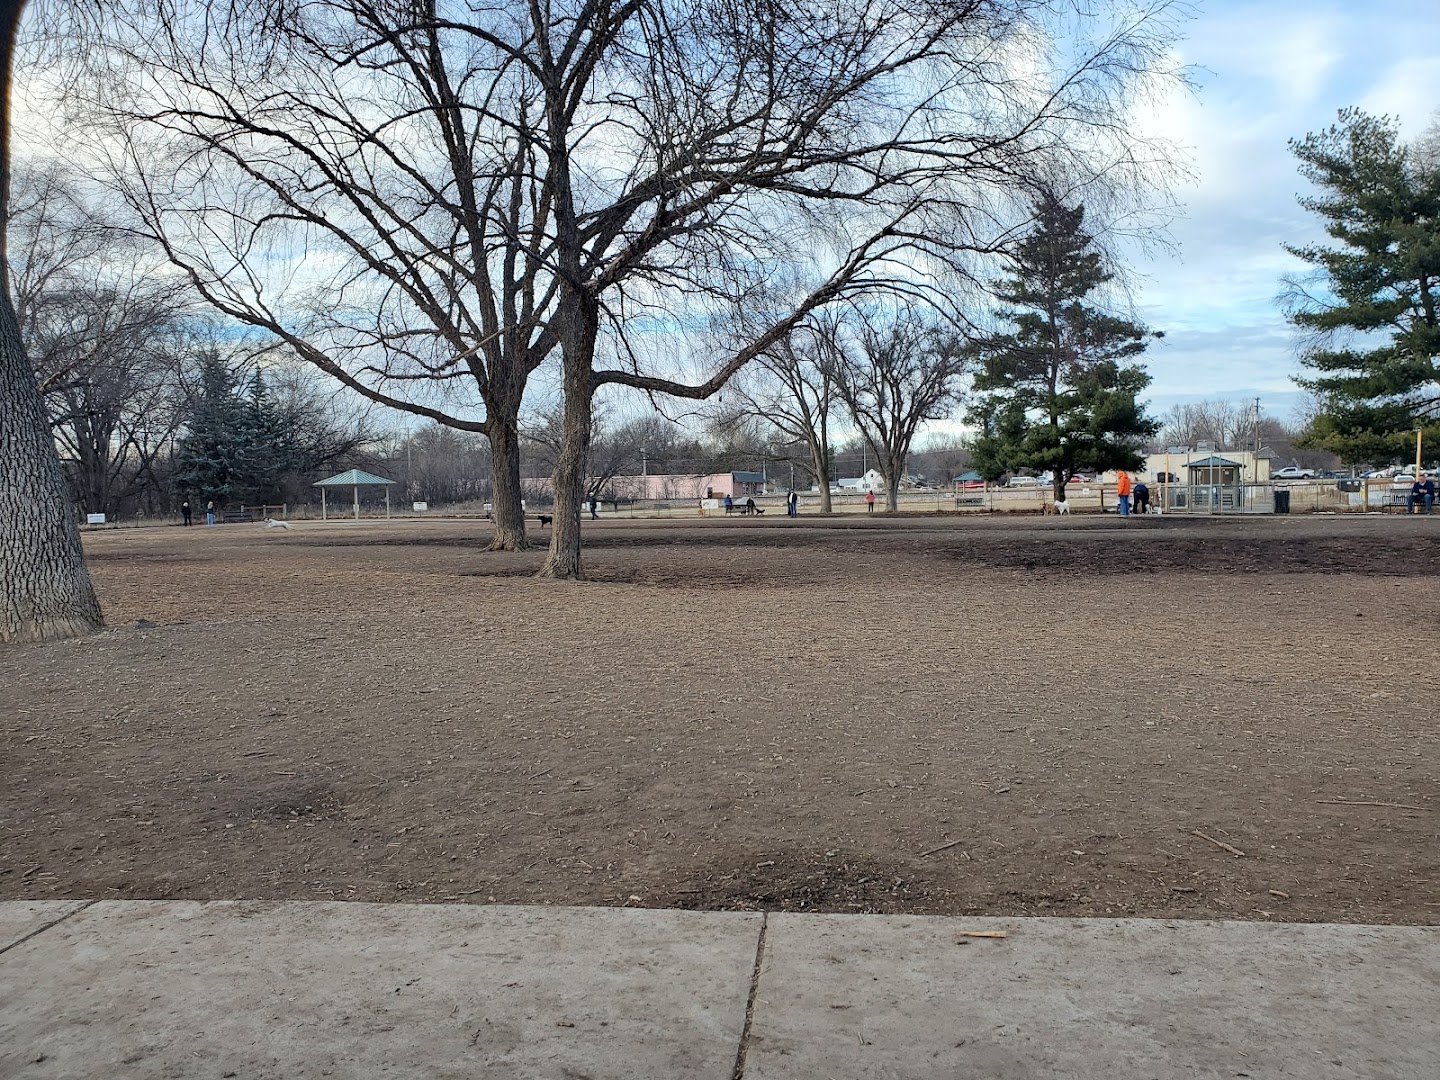 Stransky Dog Run at Peterson Park